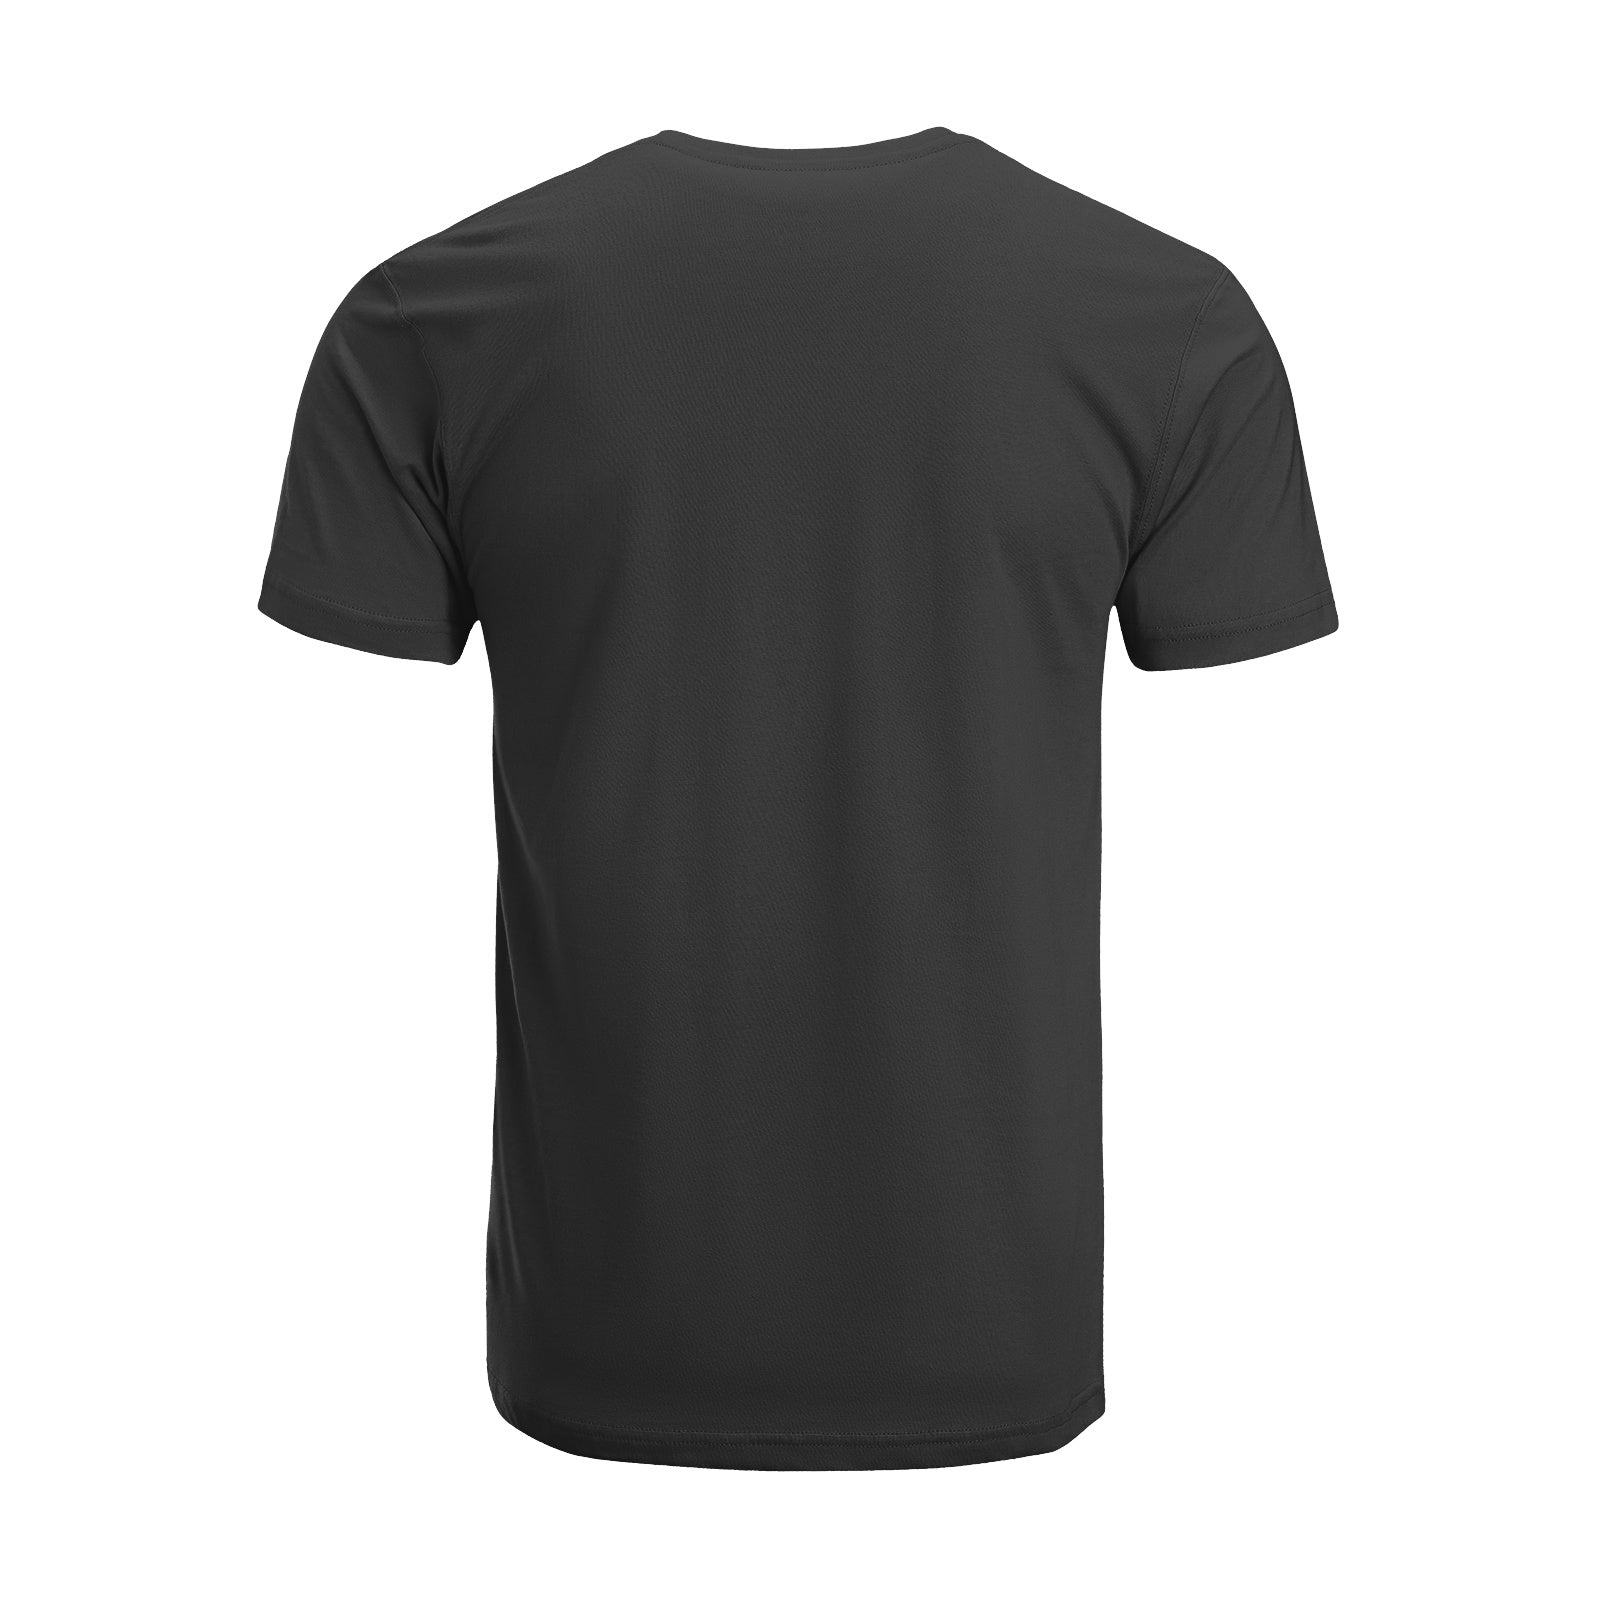 Unisex Short Sleeve Crew Neck Cotton Jersey T-Shirt DOG 04 - Tara-Outfits.com